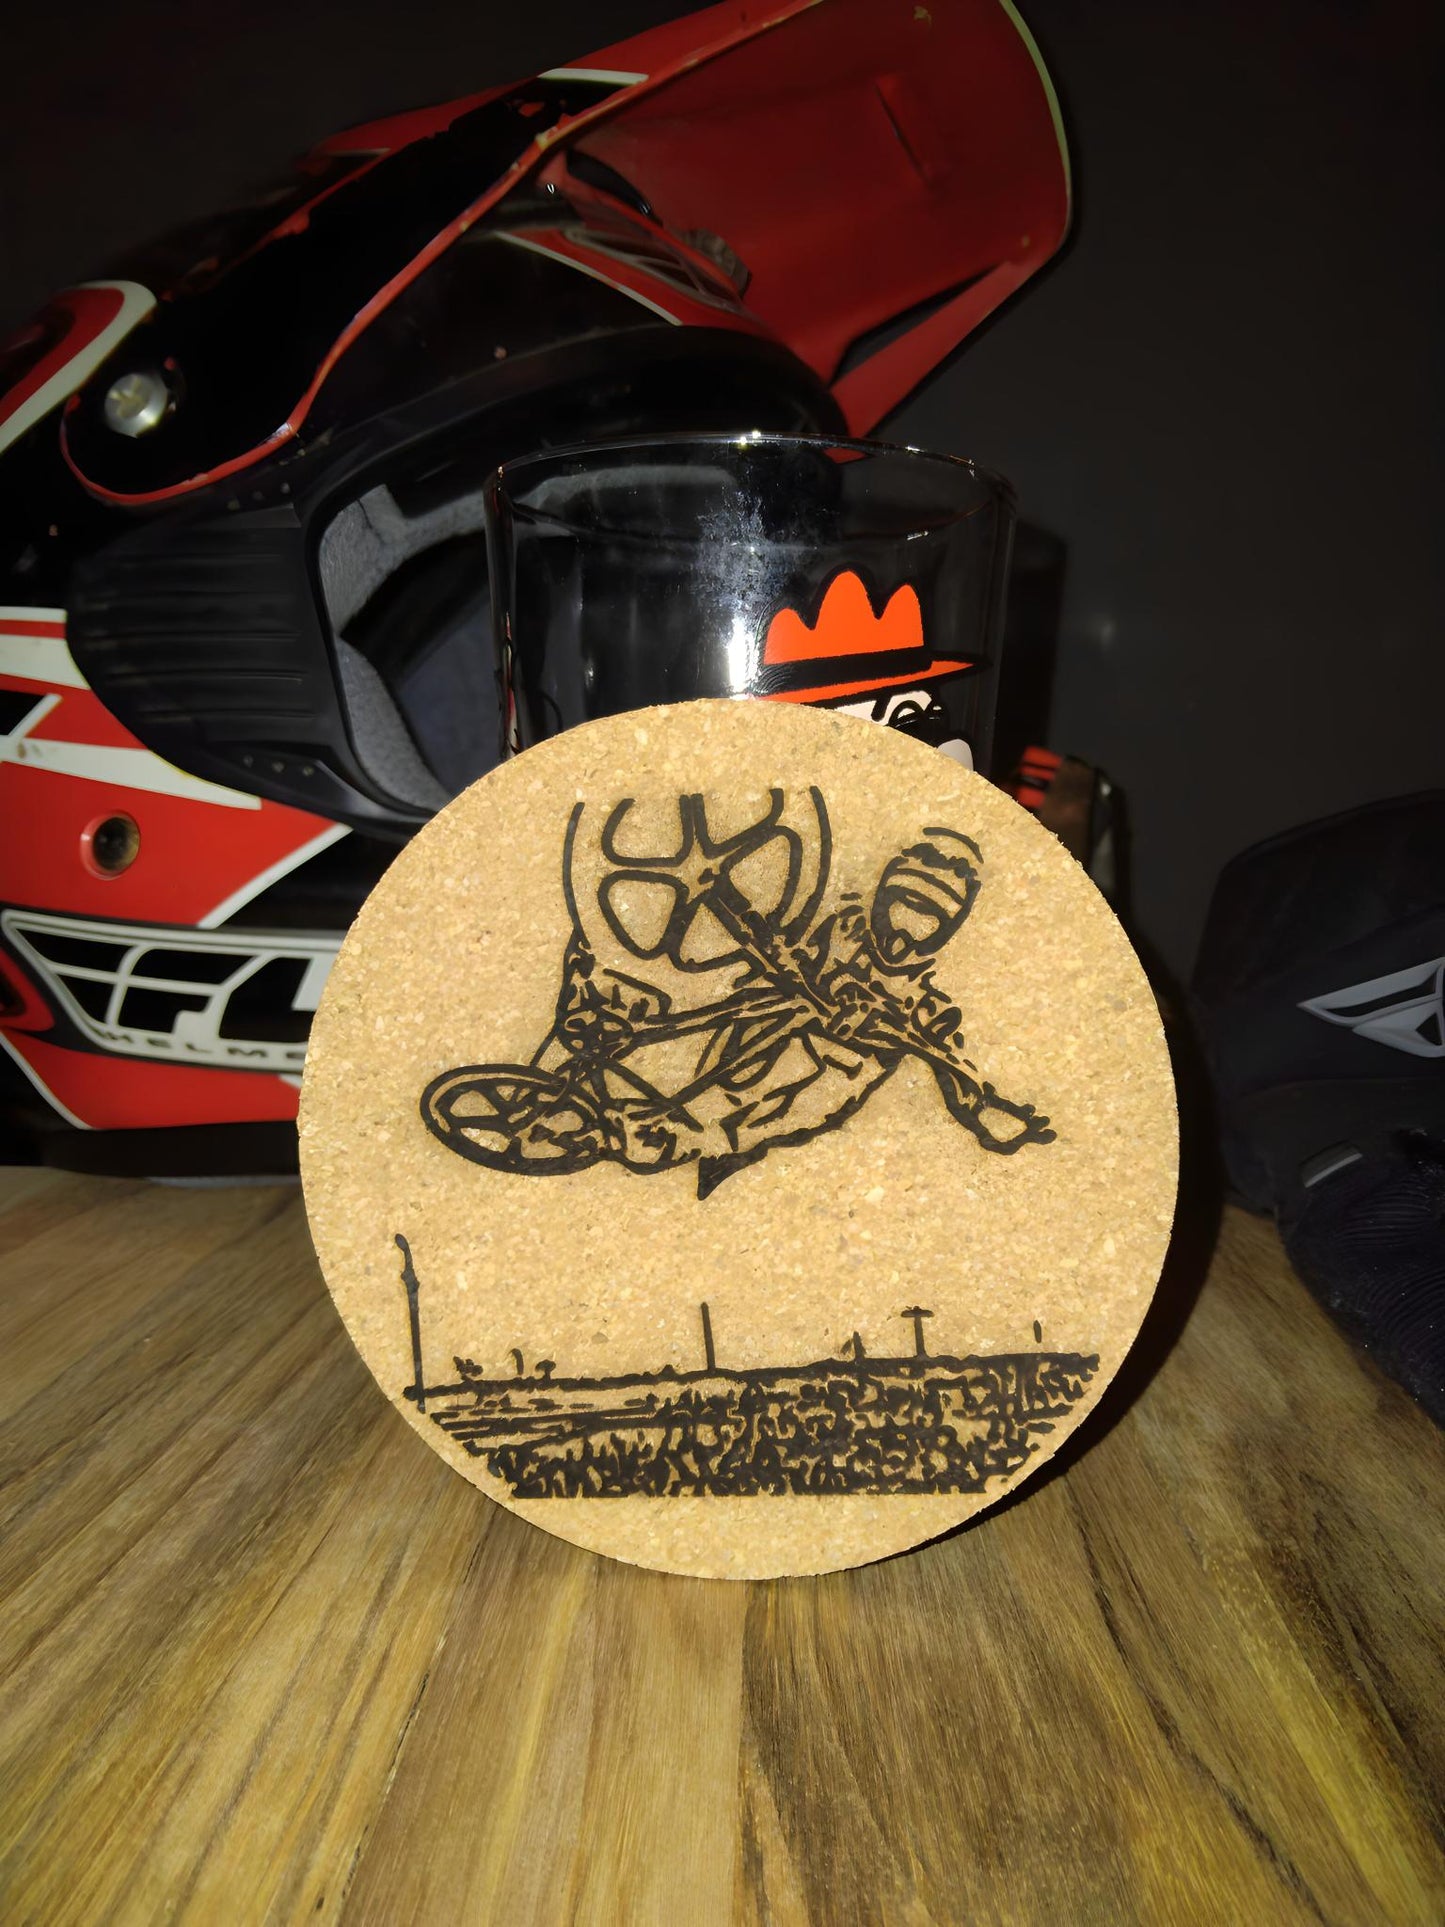 Freestyle BMX Artwork Coaster - Front